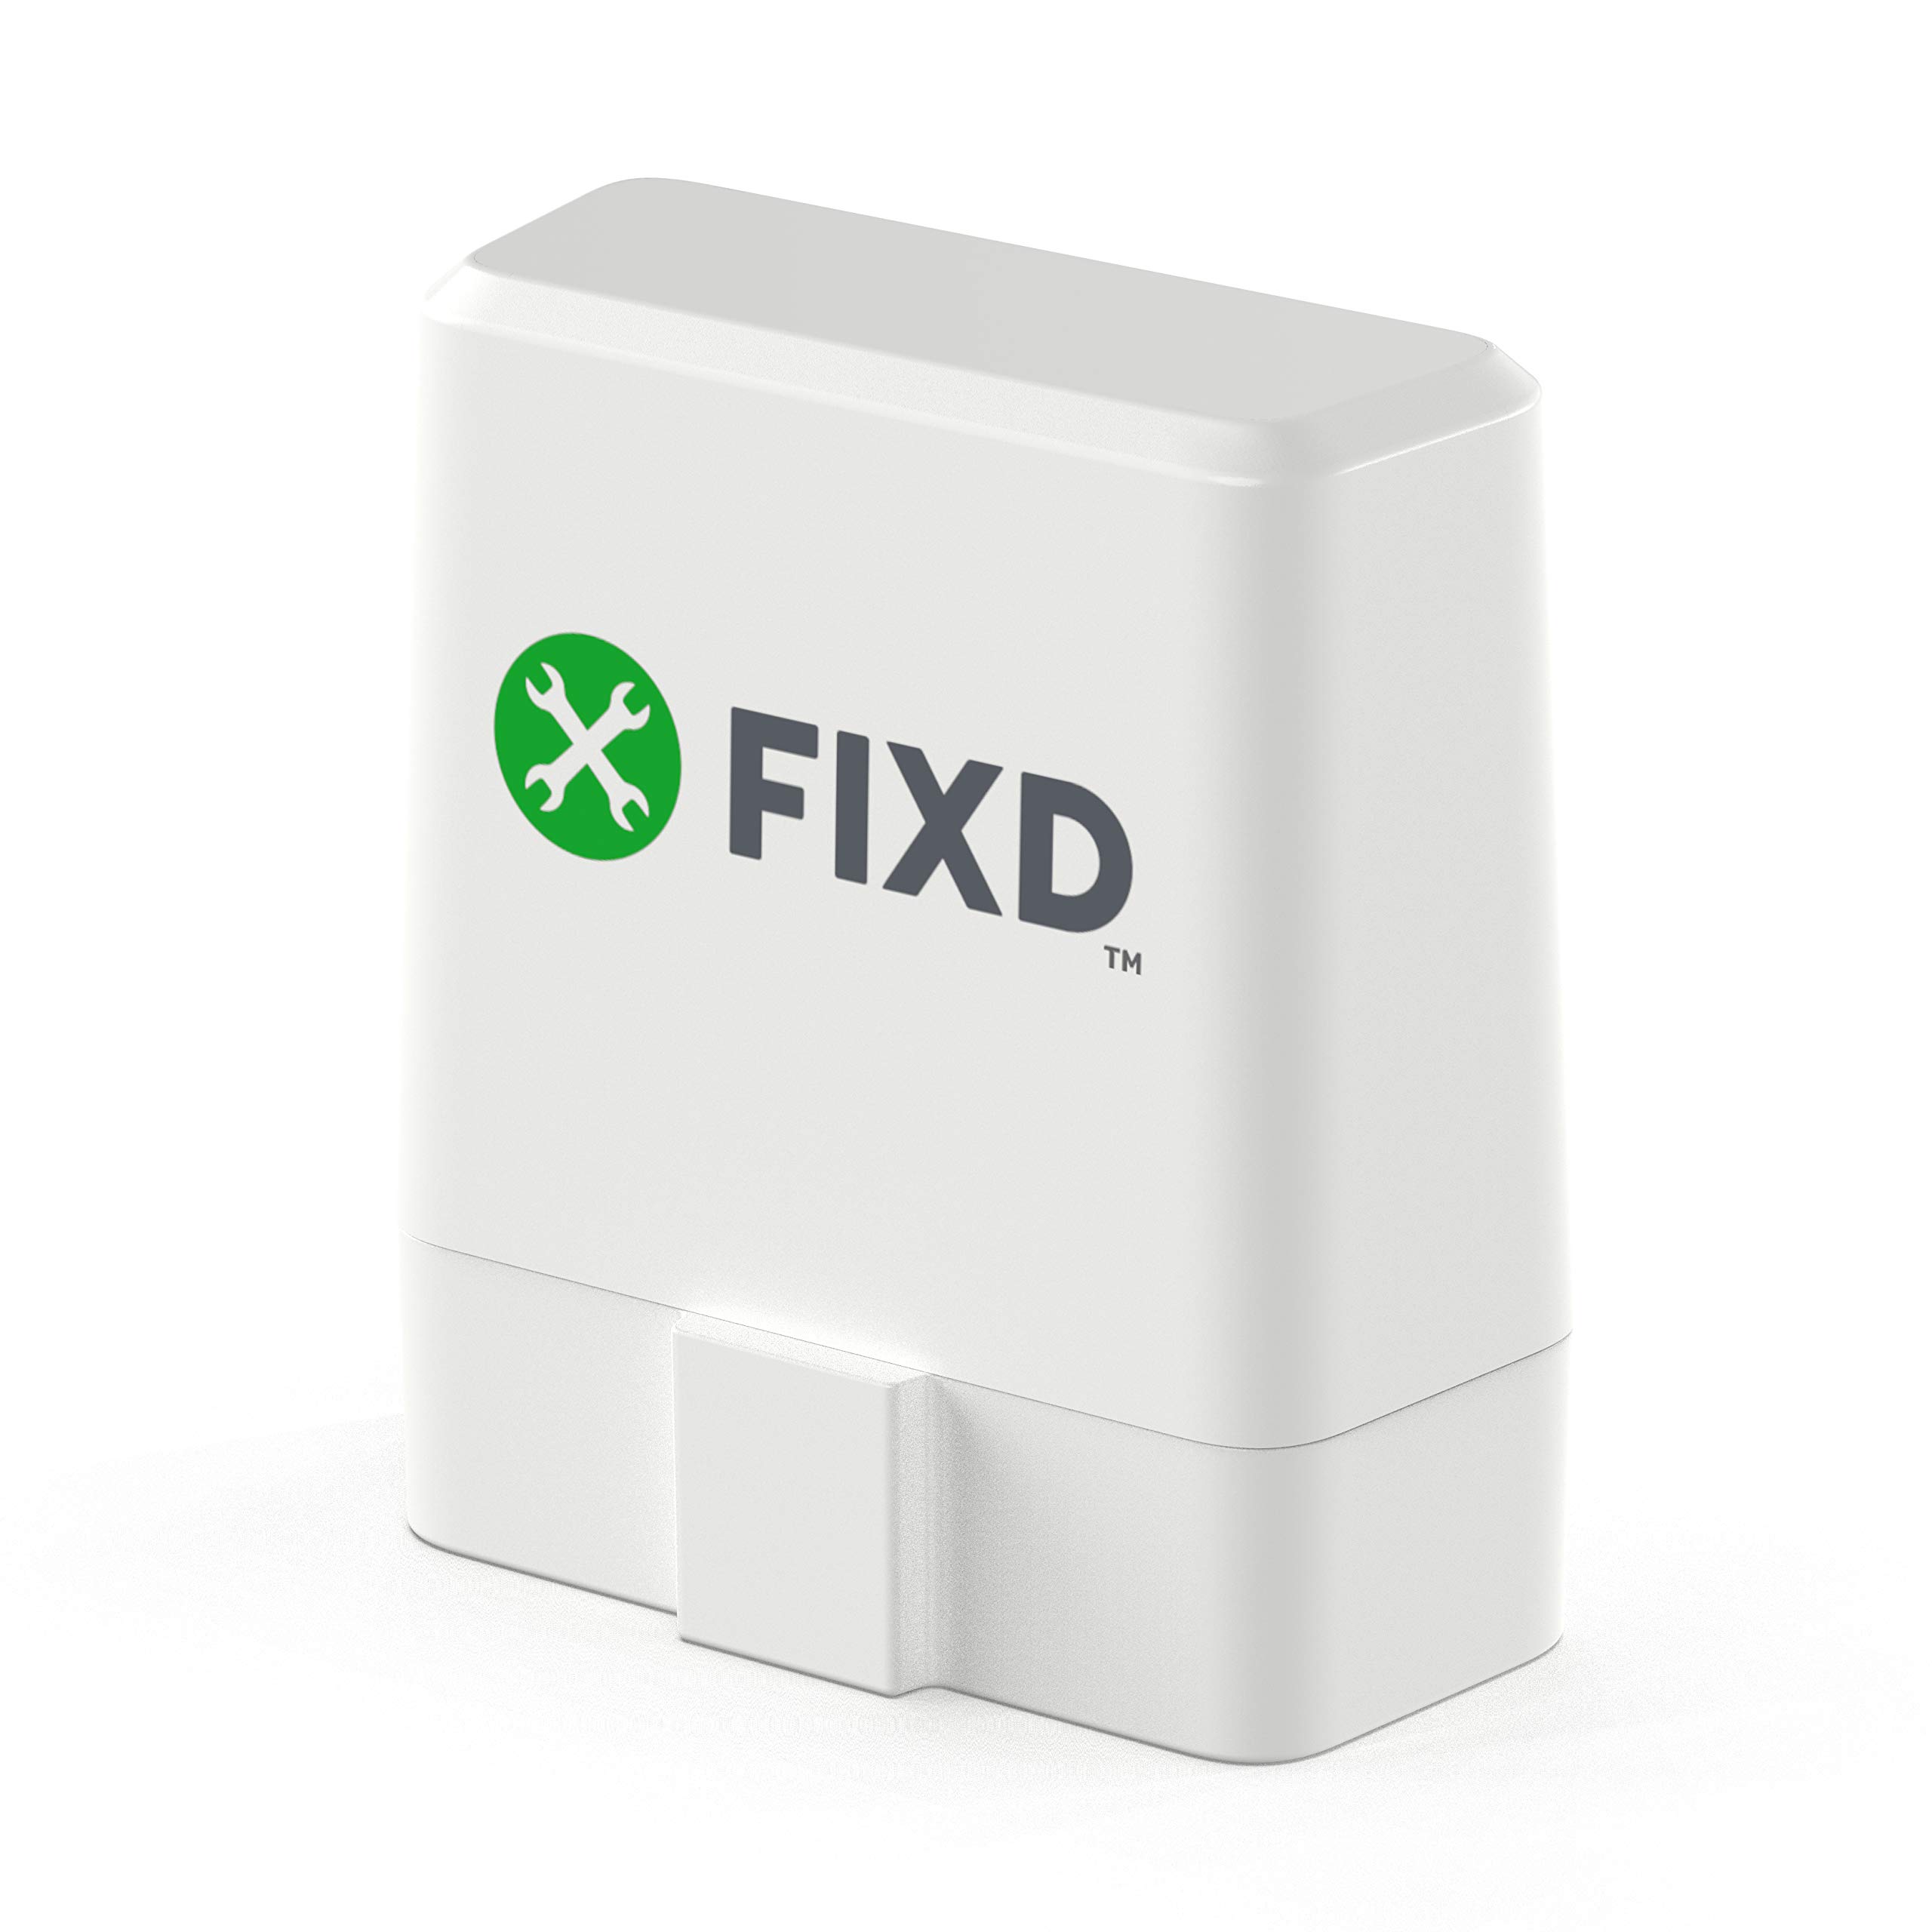  FIXD ماسح ضوئي بلوتوث OBD2 للسيارة - قارئات رموز السيارة وأدوات المسح الضوئي لأجهزة iPhone و Android - أداة التشخيص التلق...